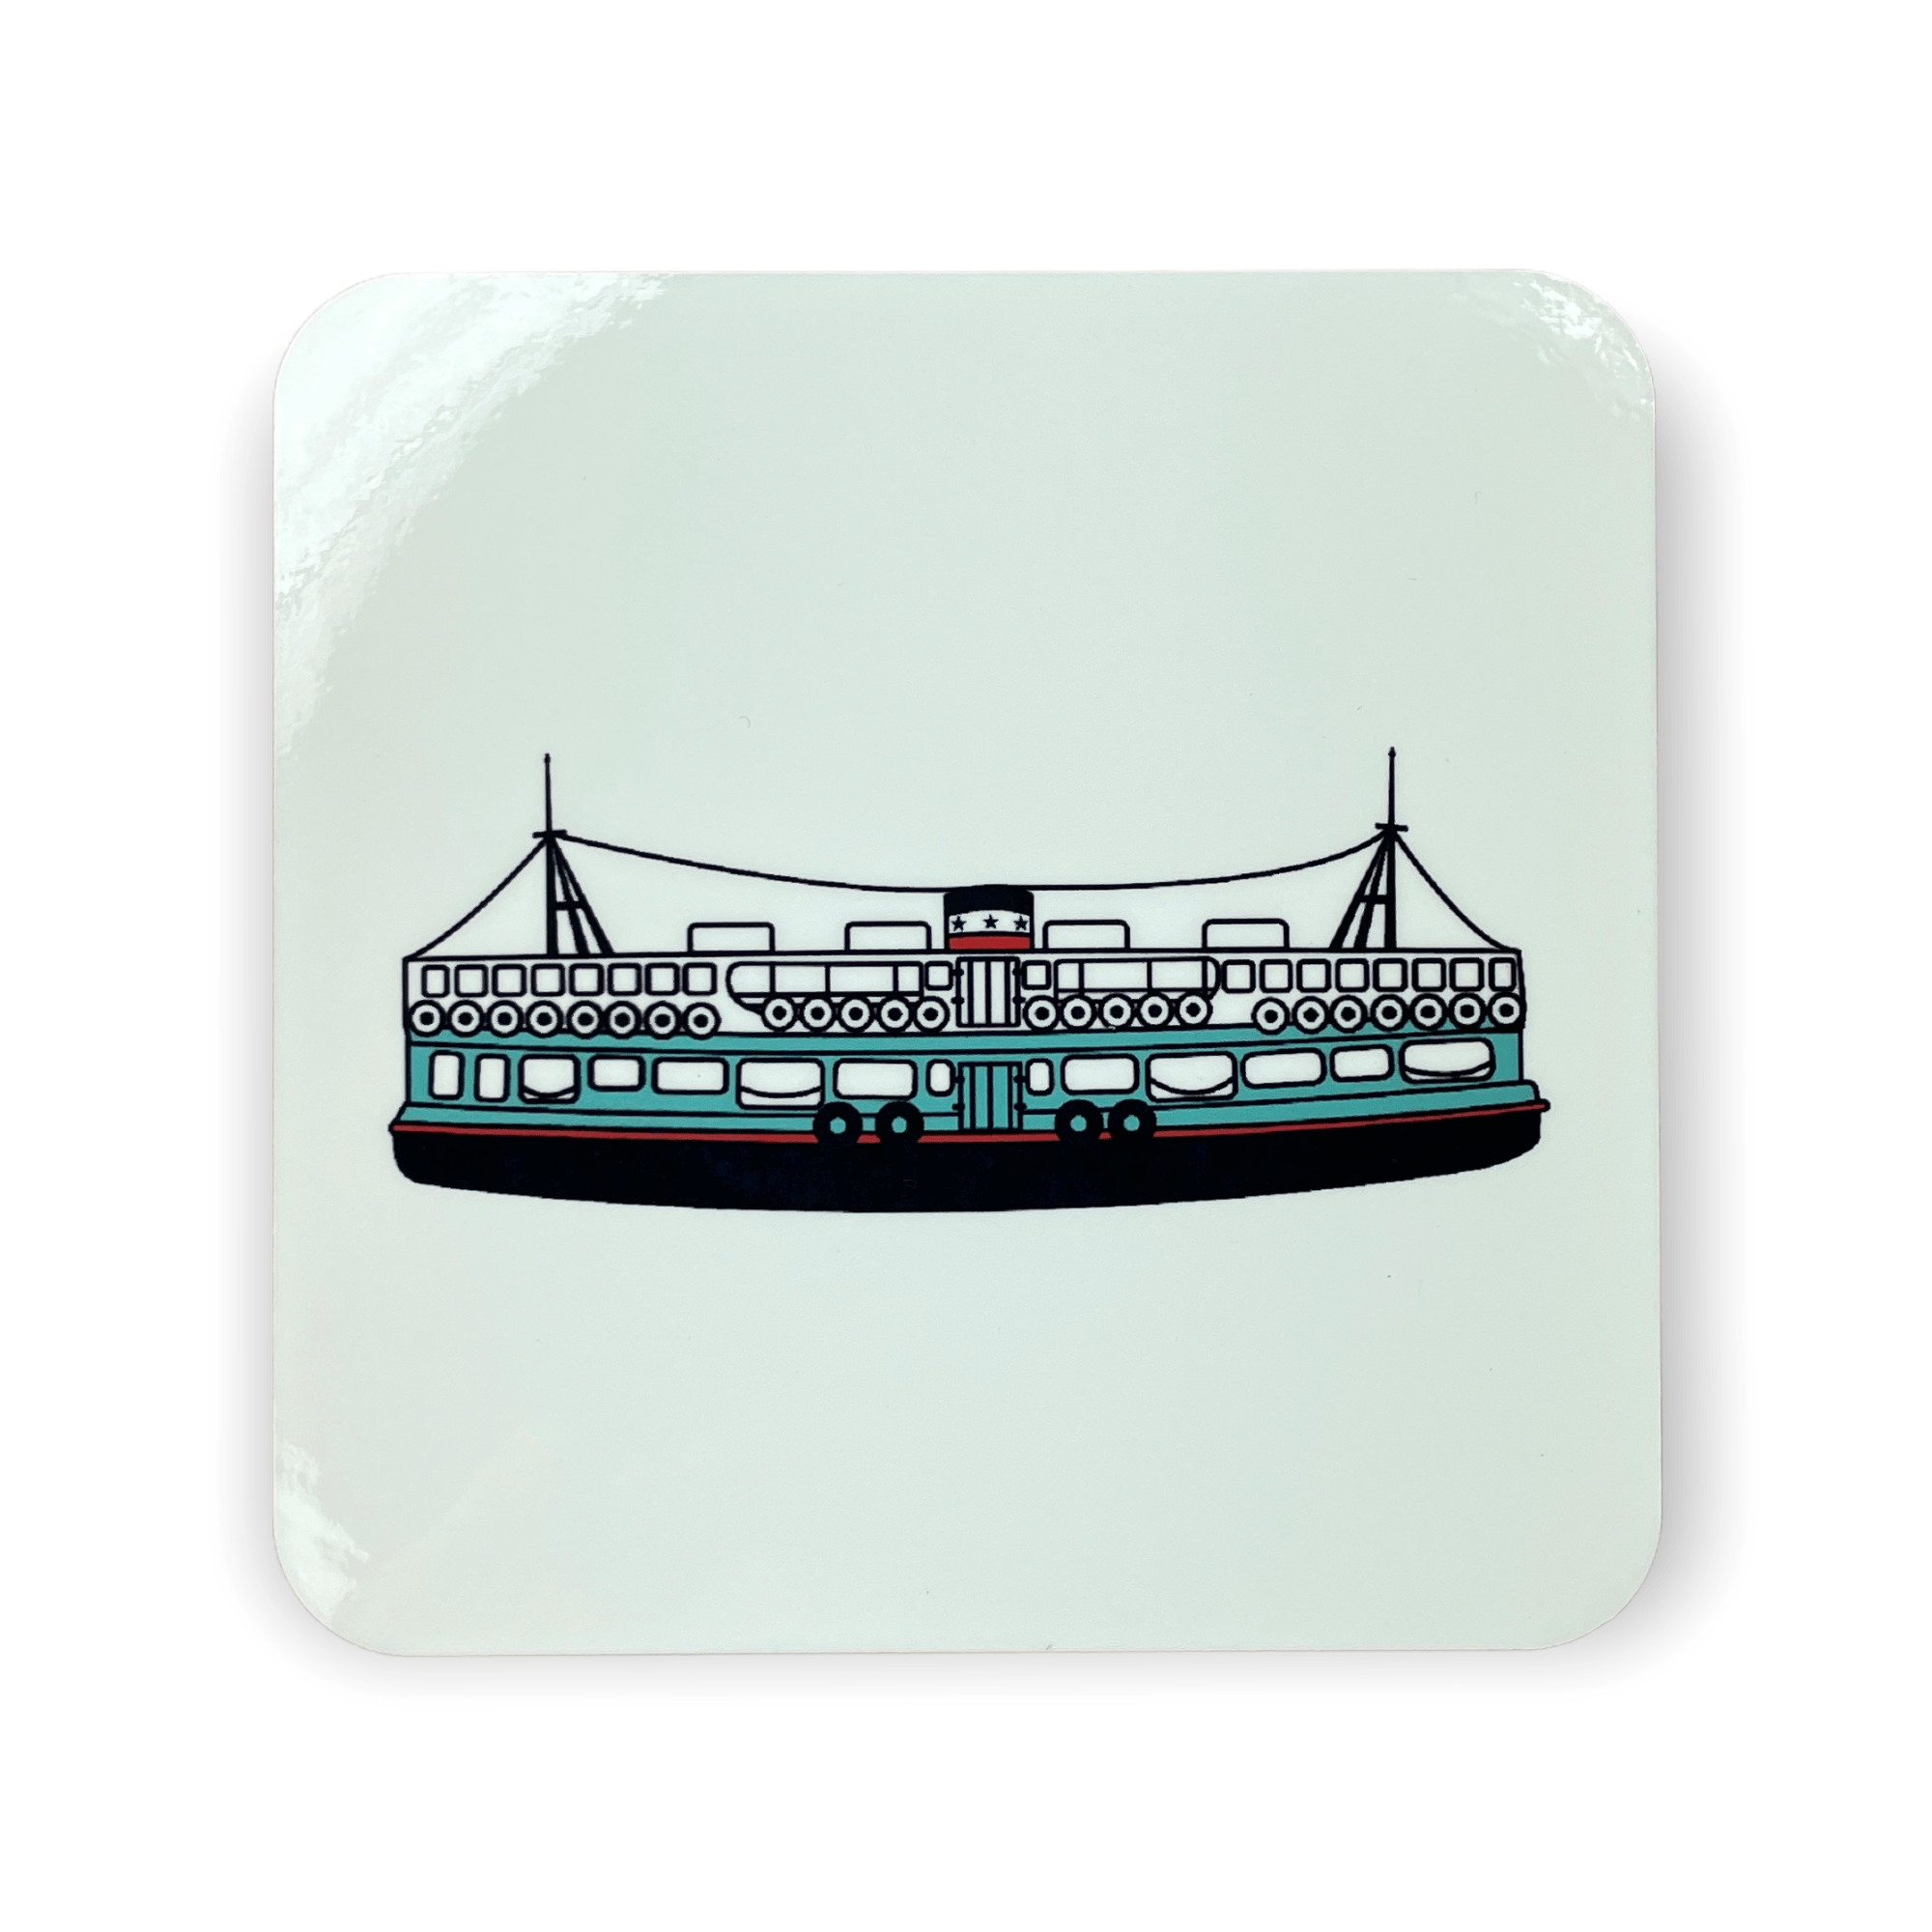 Star Ferry Coaster by Liz Fry Design